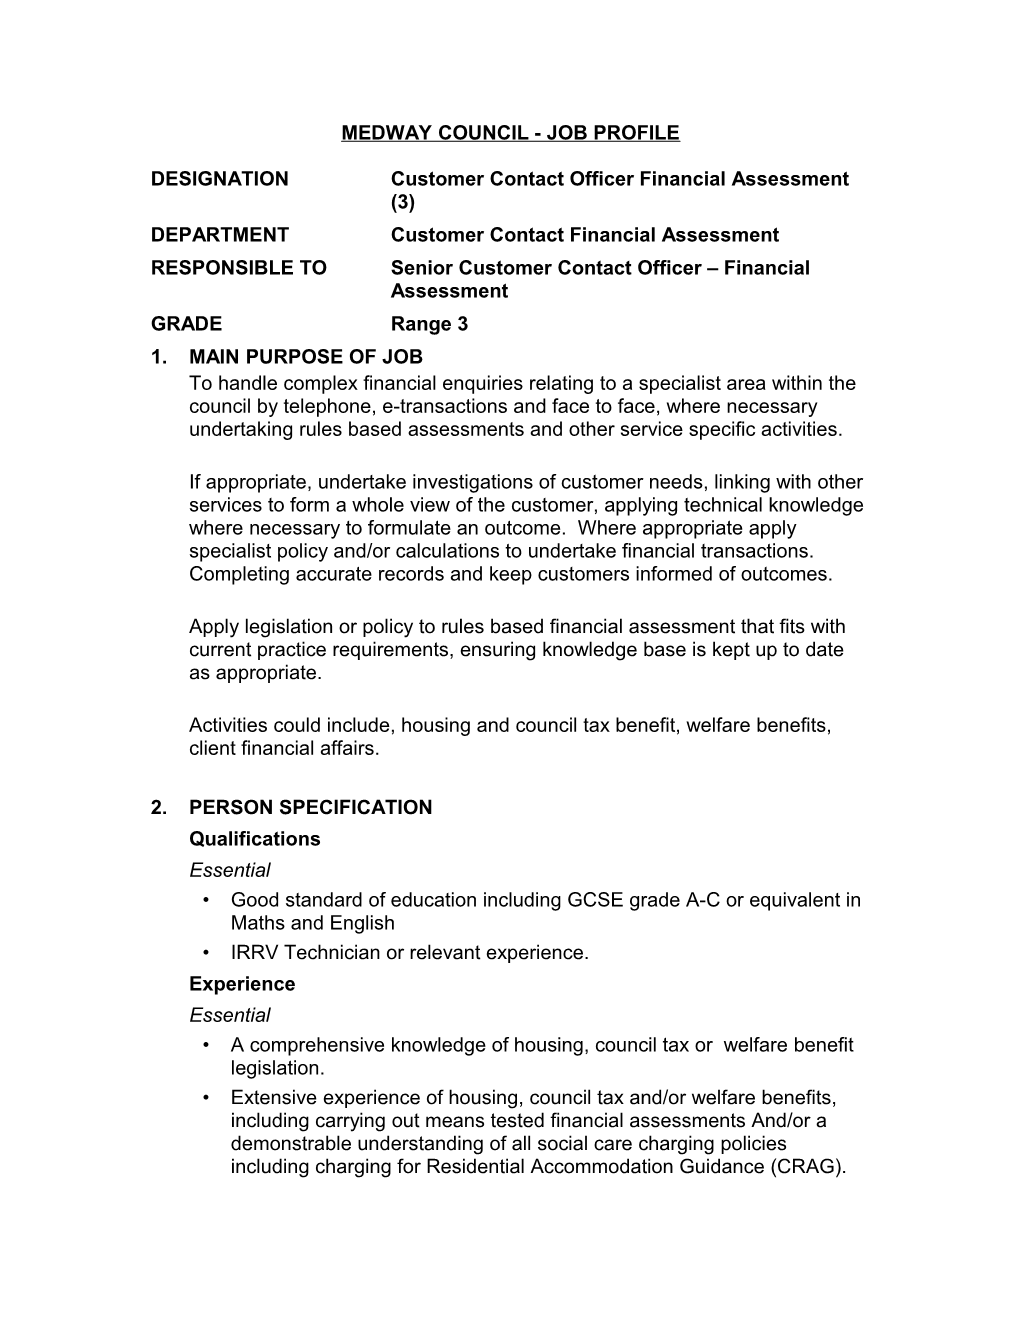 Medway Council - Job Profile